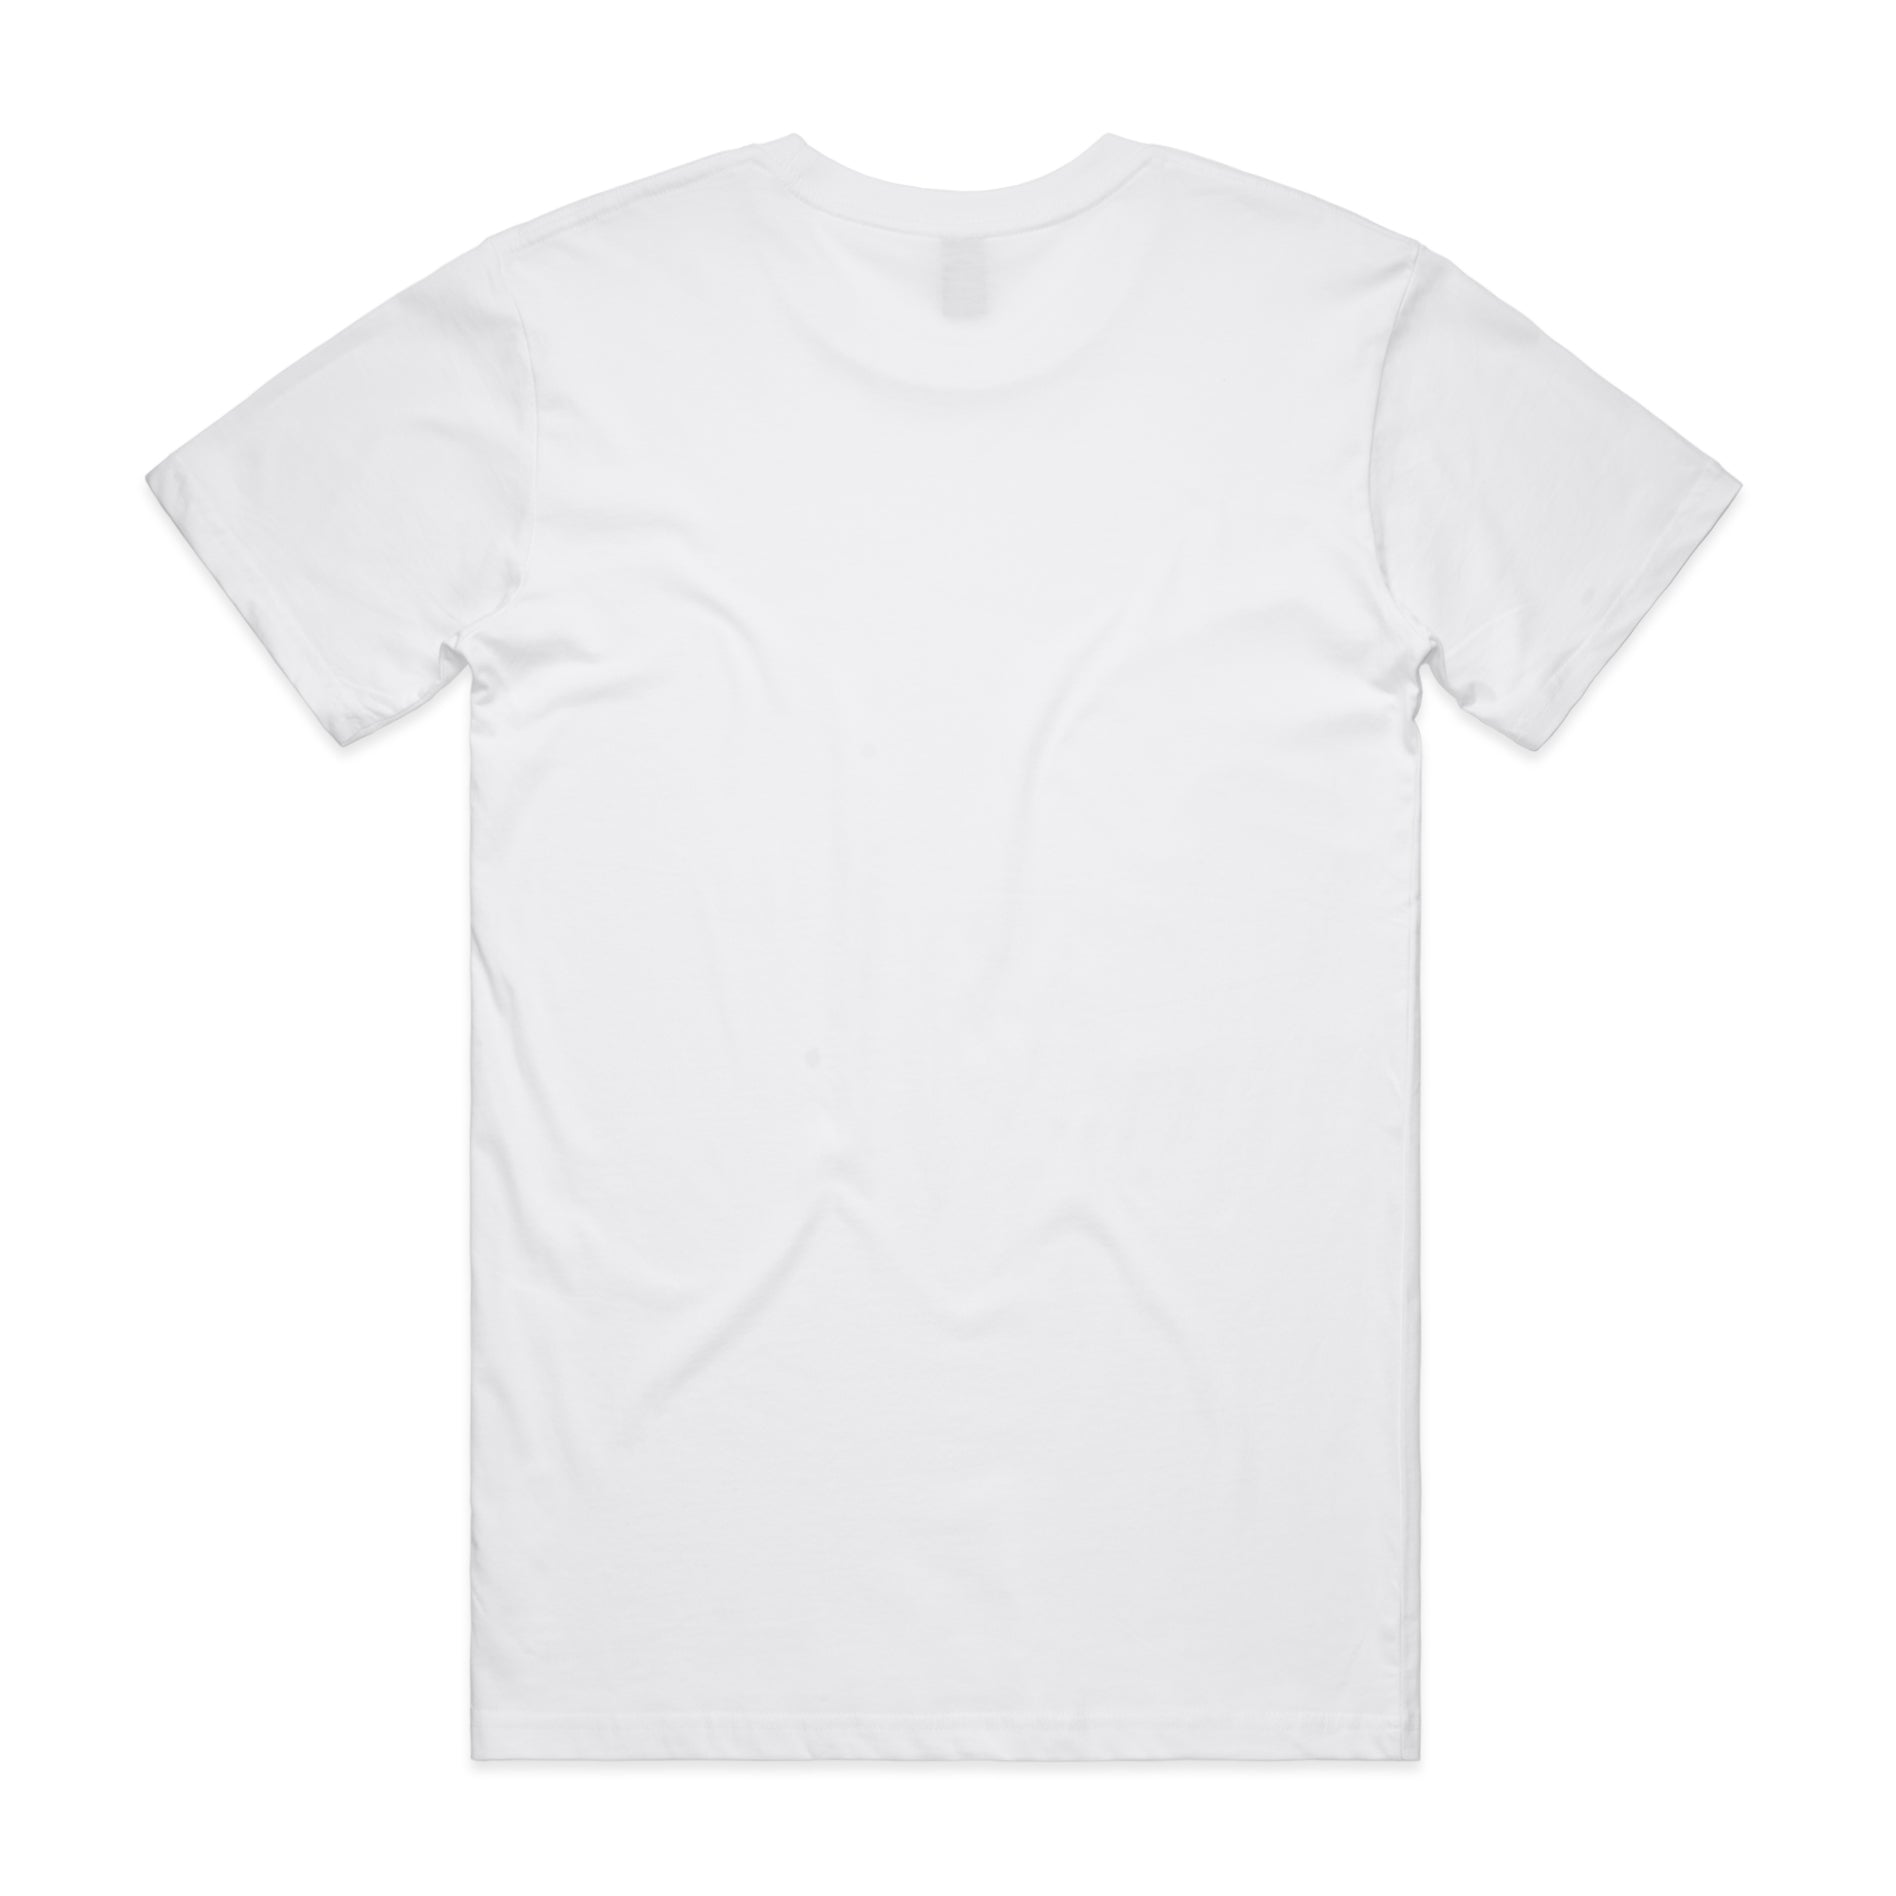 White T-Shirt - Black & White Sneaker Laced Up Print